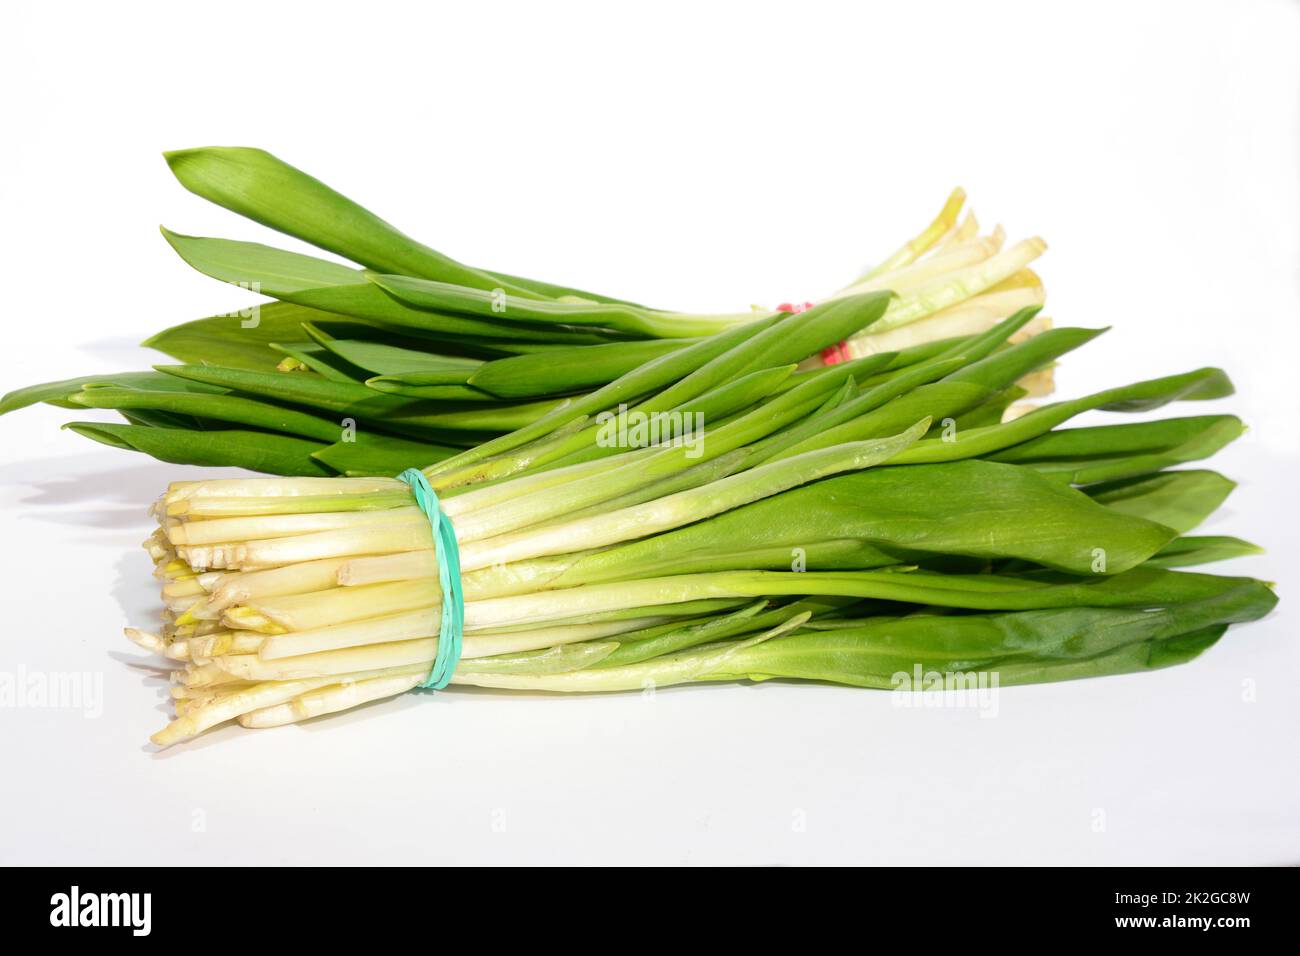 Allium ursinum – known as ramsons, buckrams, wild garlic, broad-leaved garlic, wood garlic, bear leek, or bear's garlic isolated on white background Stock Photo